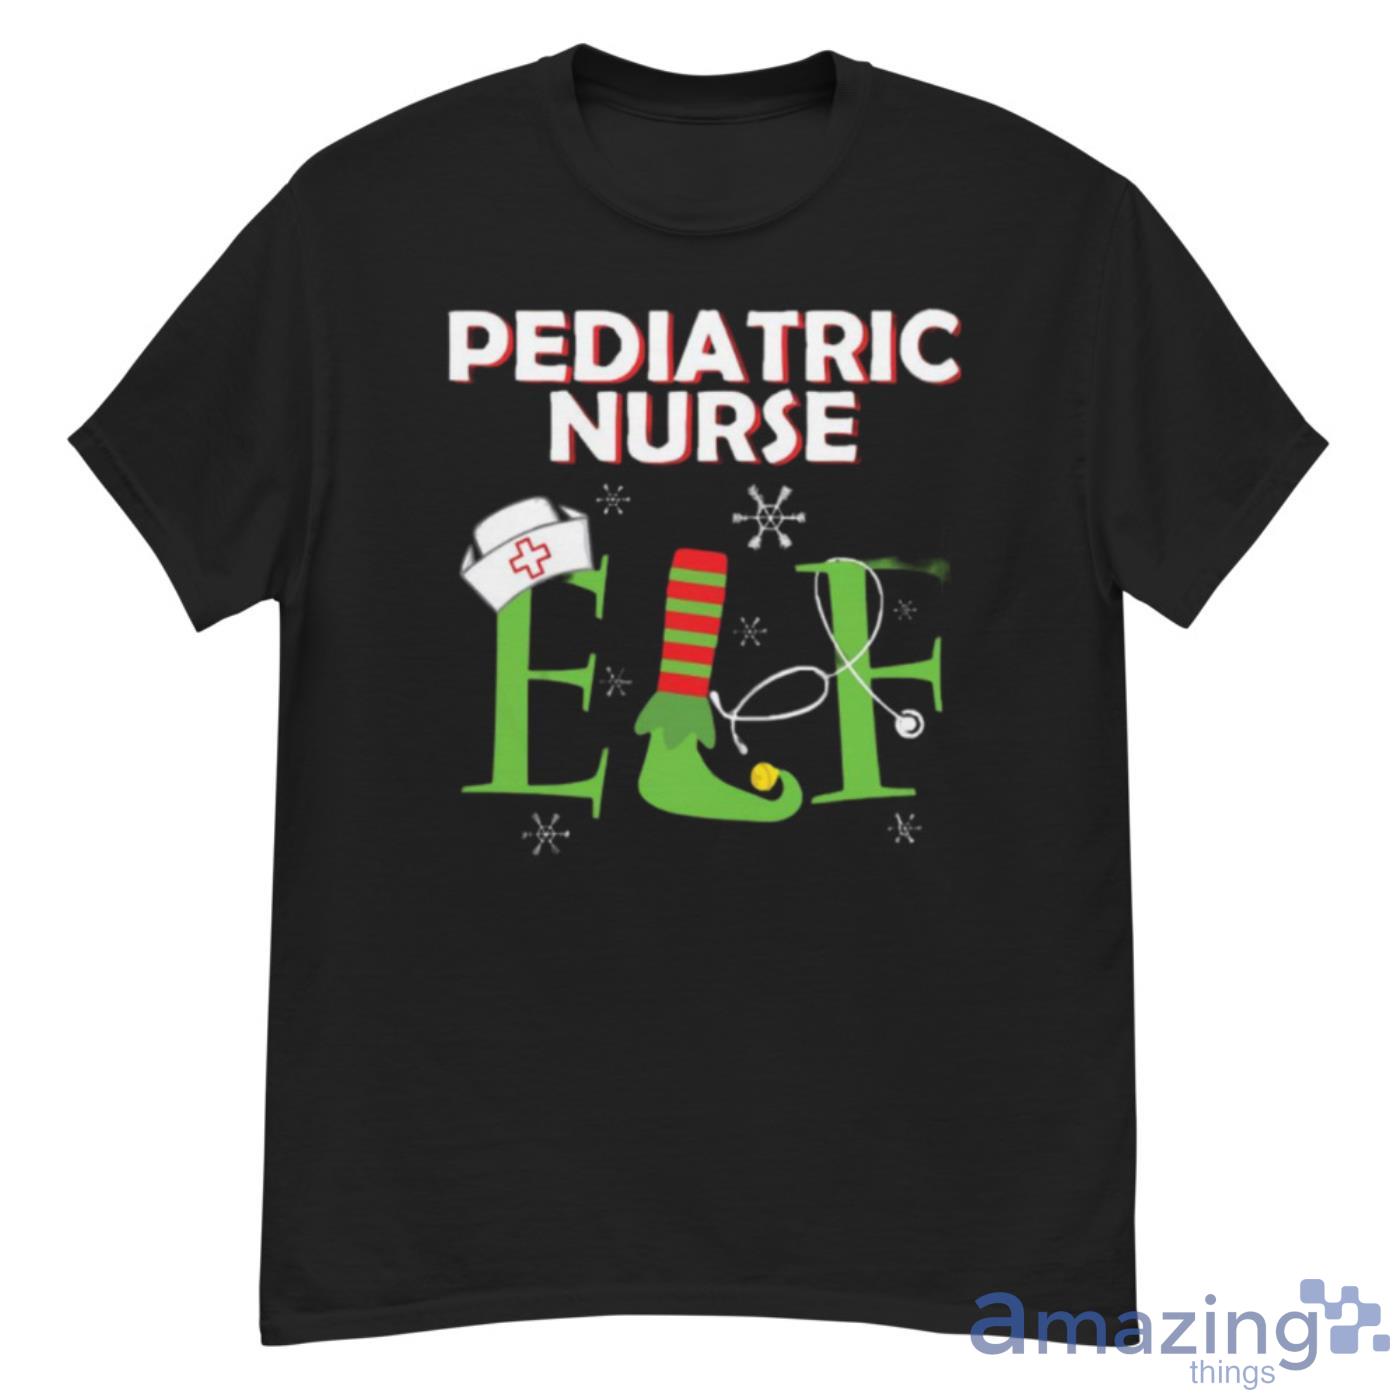 Pediatric Nurse Elf Christmas Matching Group Costume Shirt - G500 Men’s Classic T-Shirt